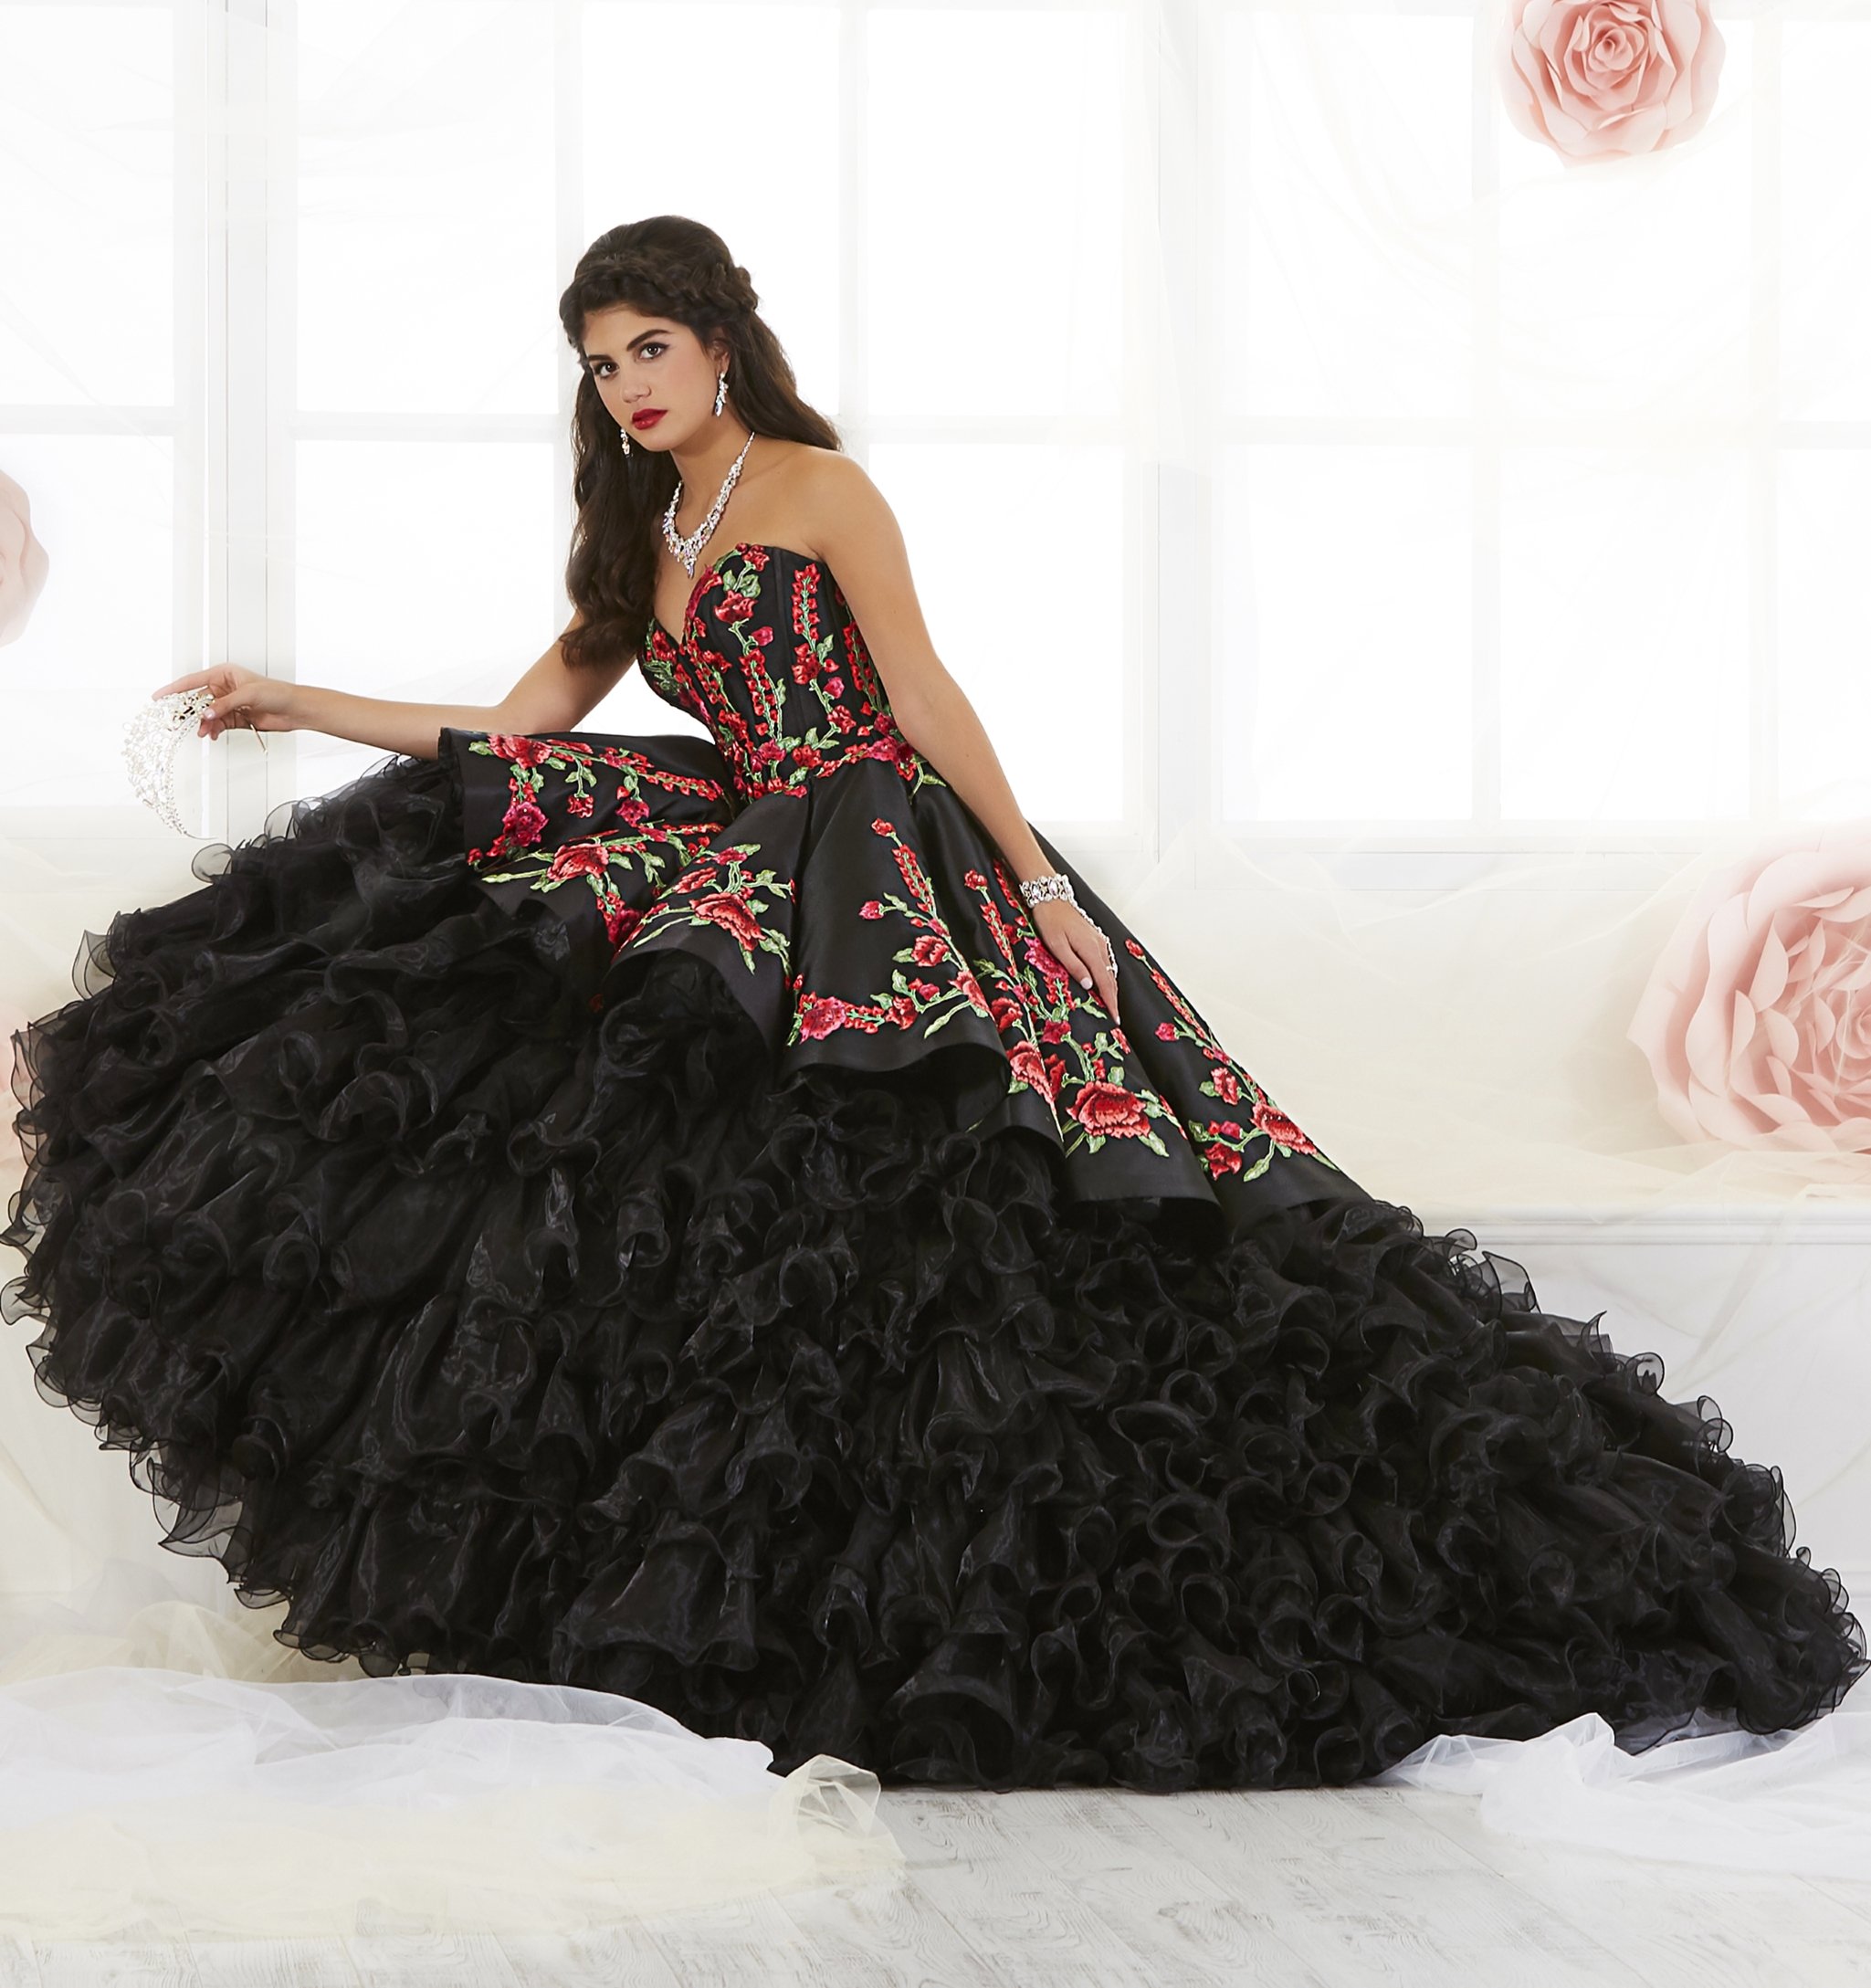 Rose Charro Quinceanera Dress - Toledoz Boutique